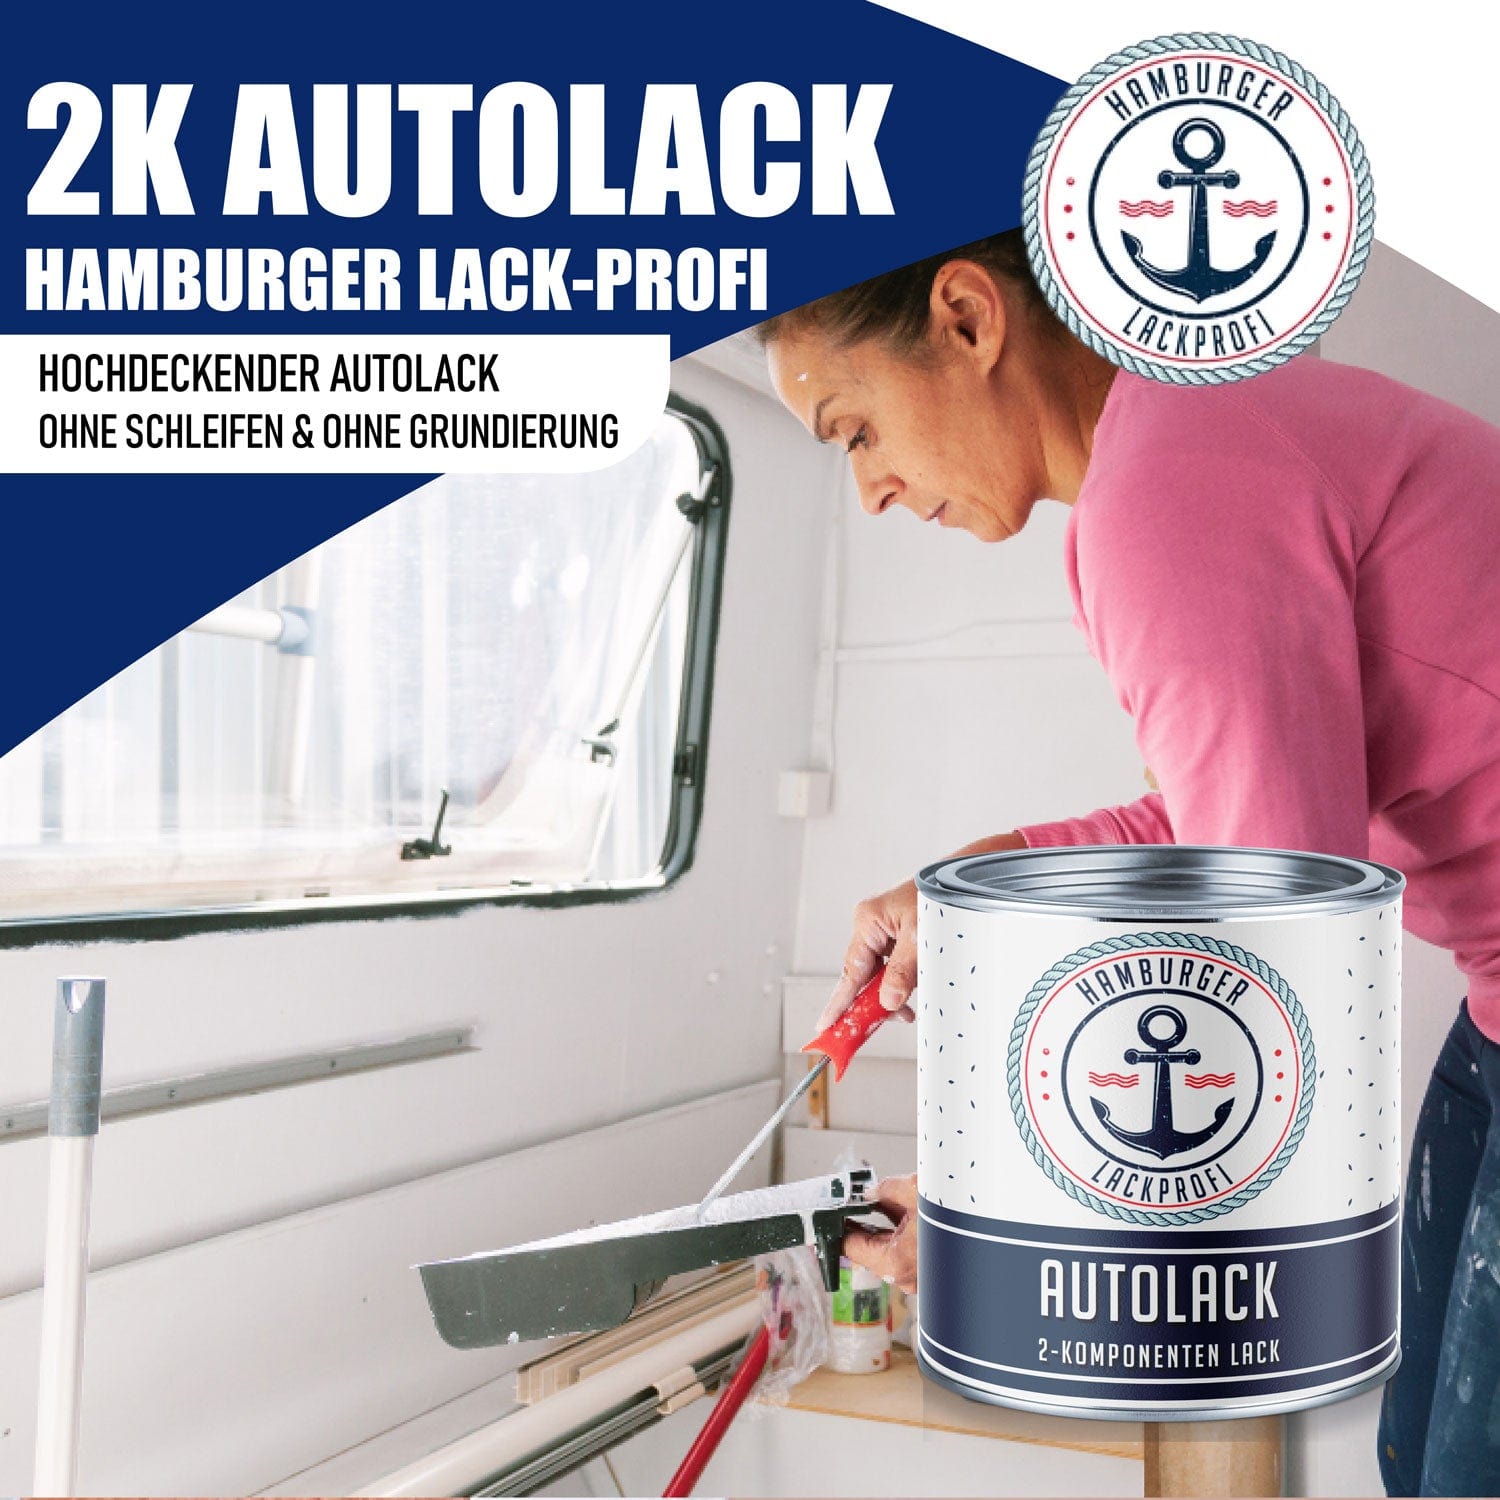 Hamburger Lack-Profi Lacke & Beschichtungen Hamburger Lack-Profi 2K Autolack in Verkehrsgrau B RAL 7043 mit Lackierset (X300) & Verdünnung (1 L) - 30% Sparangebot